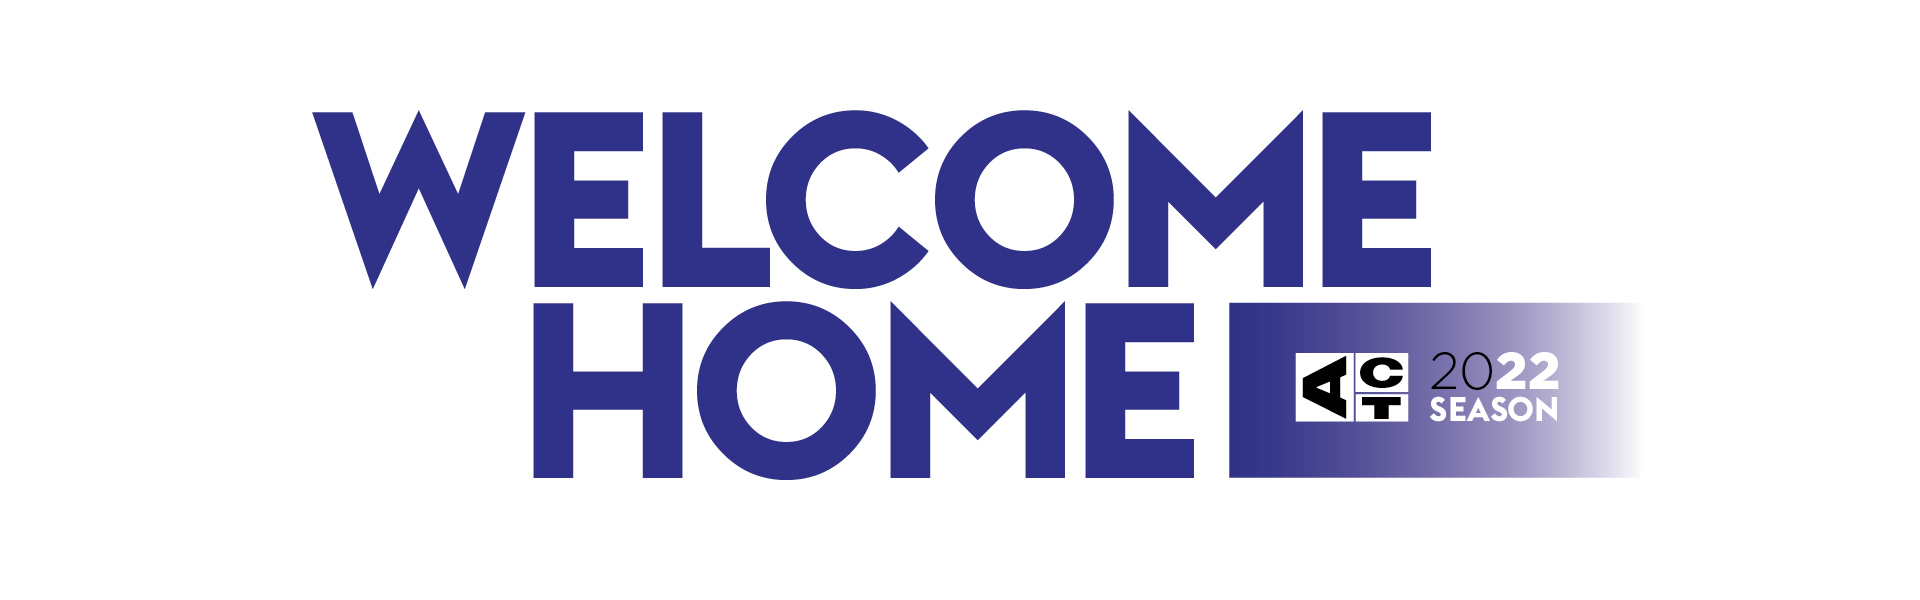 Welcome Home - ACT 2022 Season